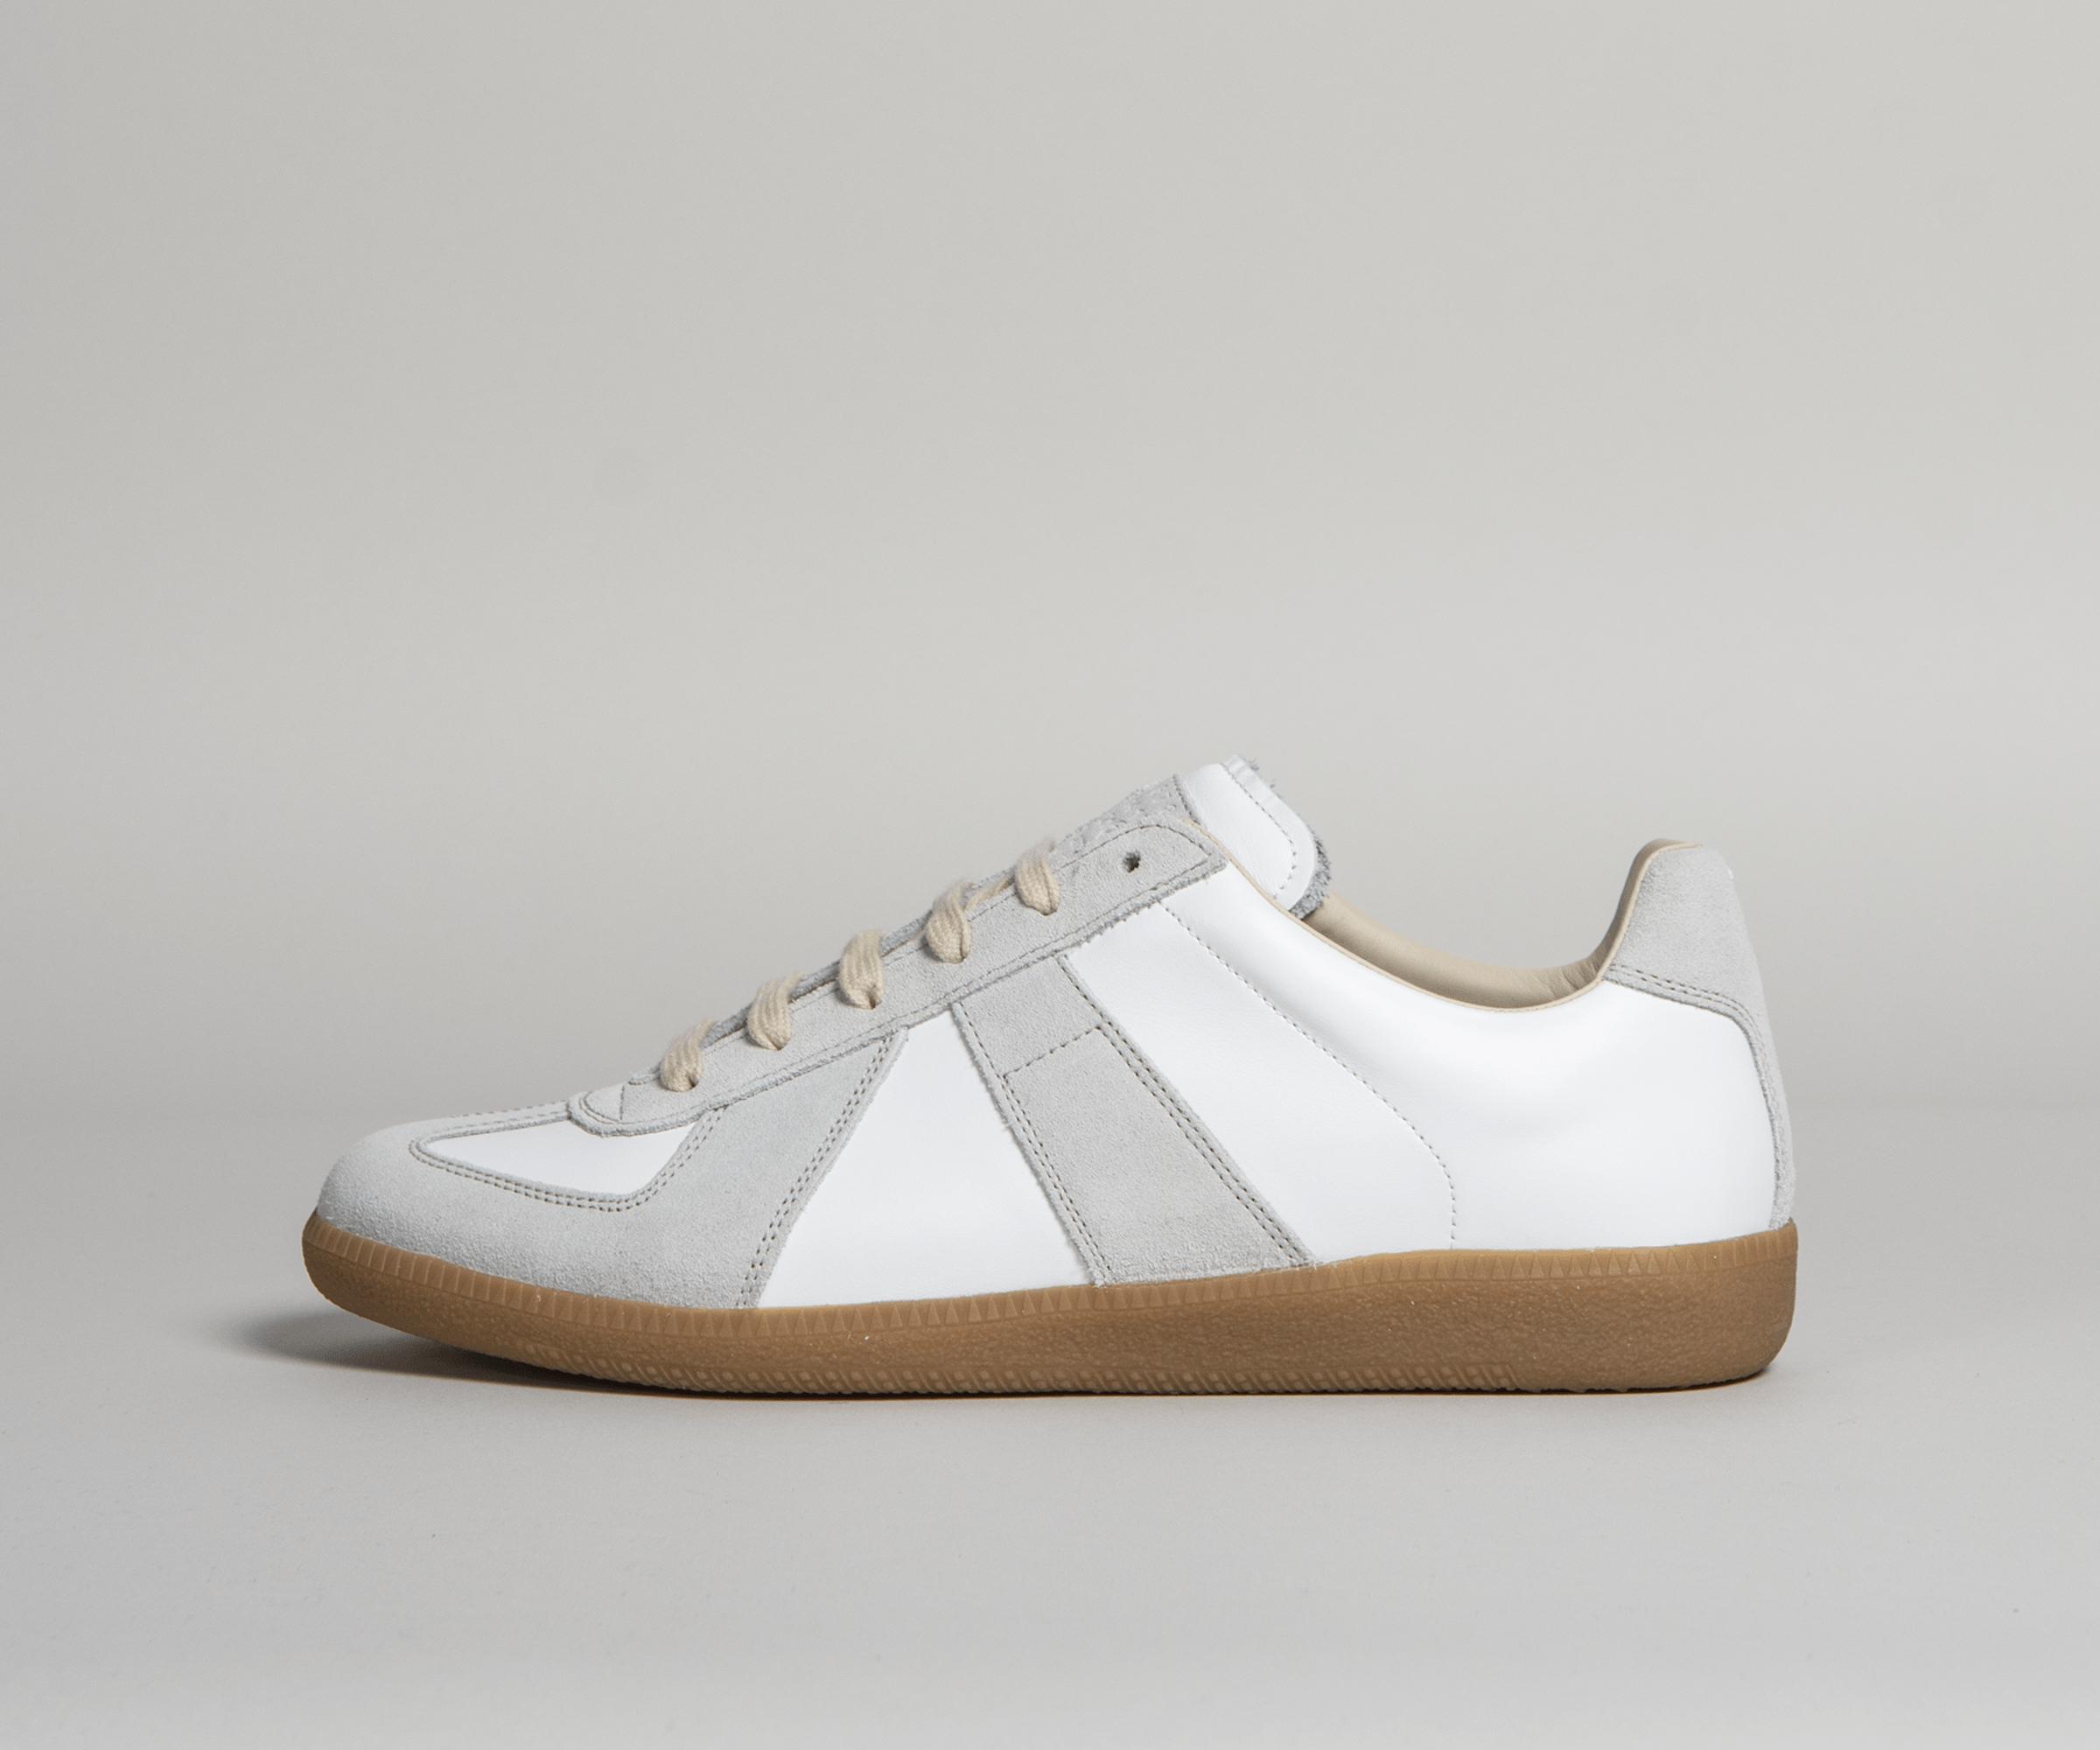 Maison Margiela Leather 22 Classic Replica Sneaker in White for Men - Lyst